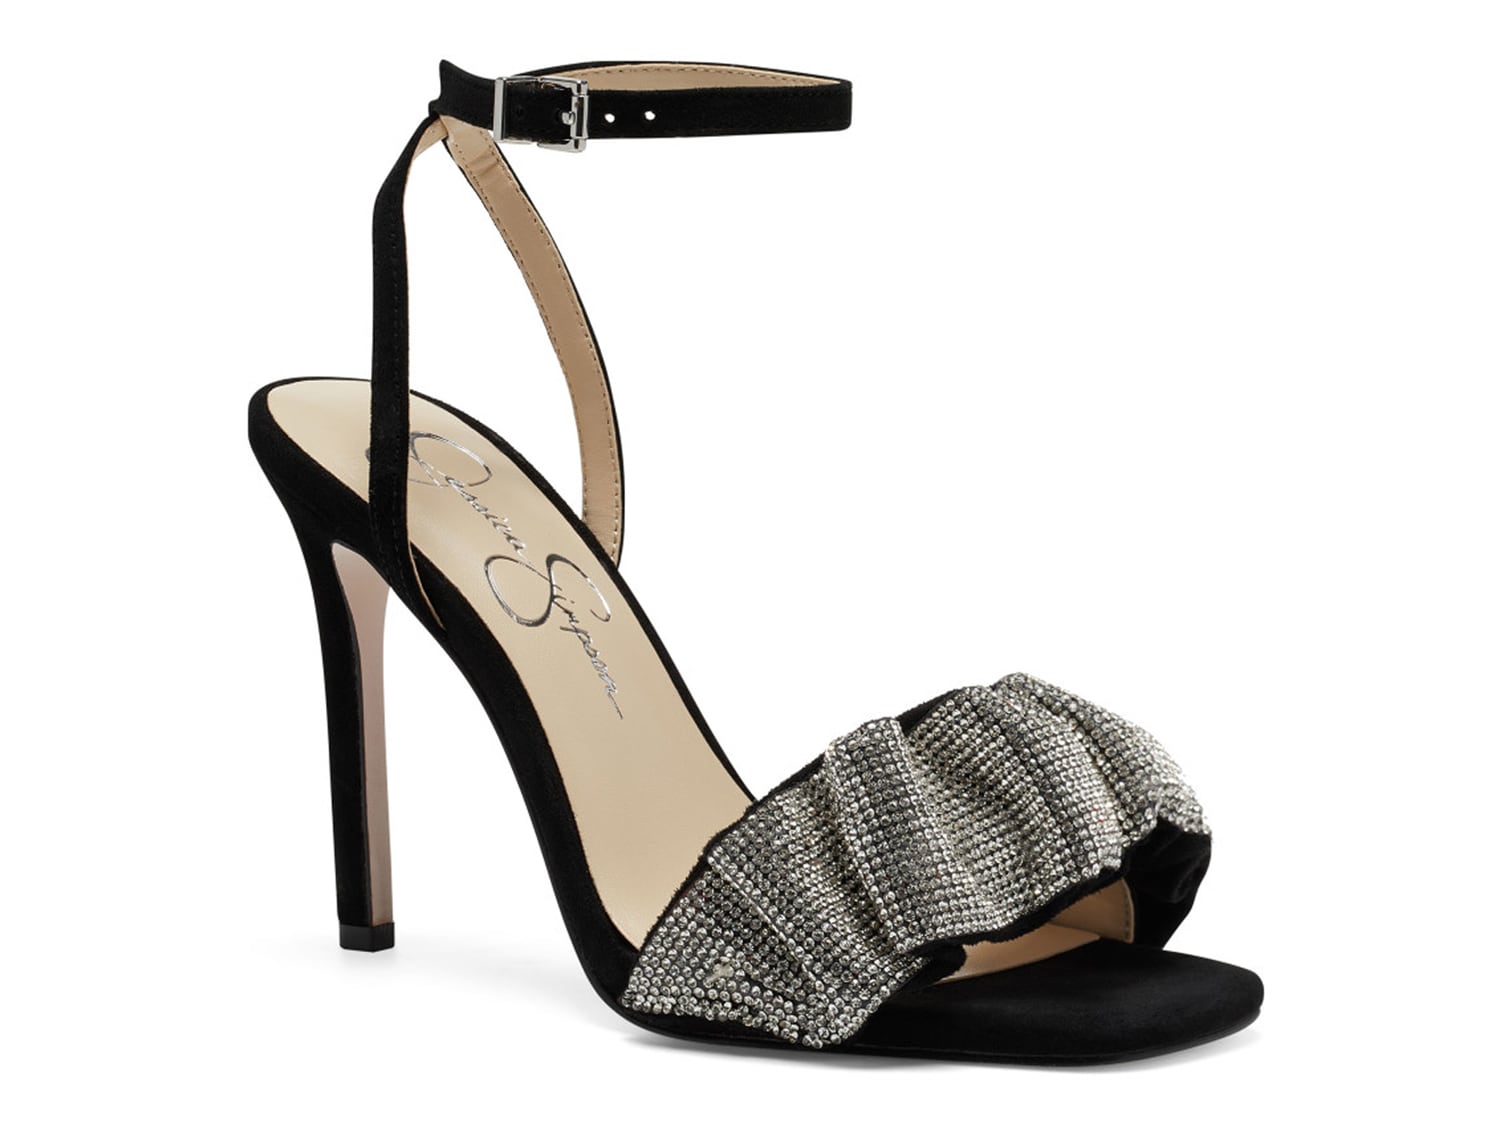 Jessica Simpson Owina Dress Sandal - Free Shipping | DSW